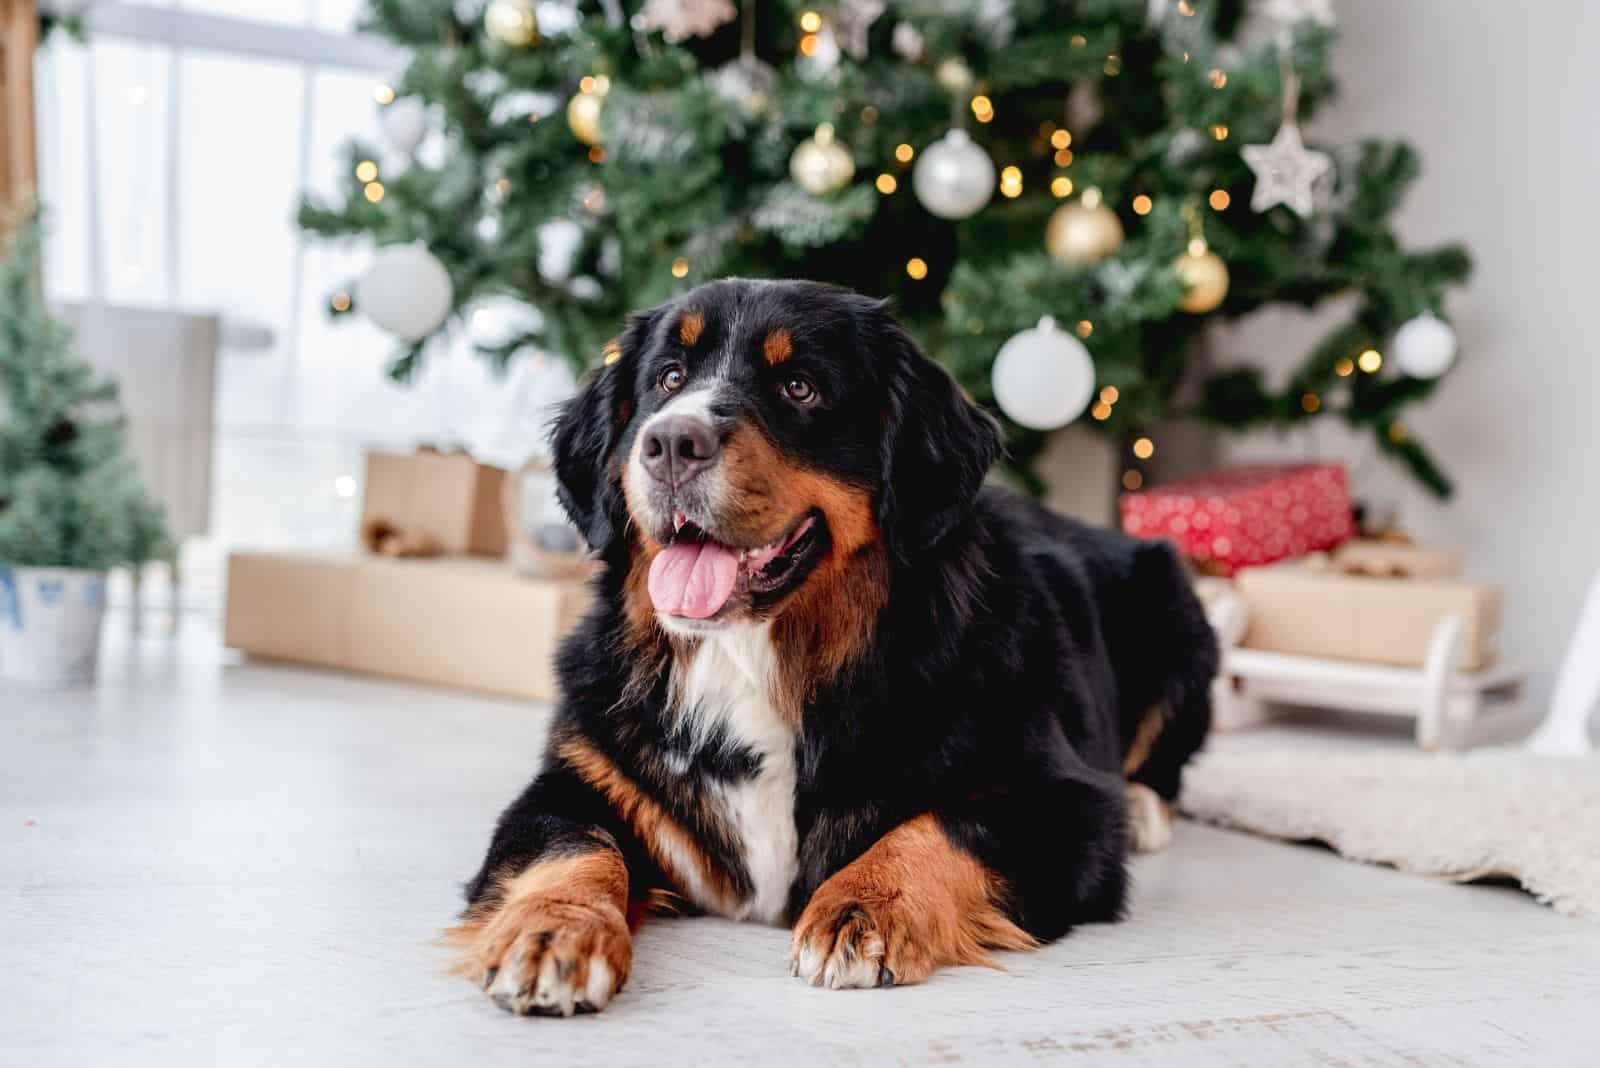 Bernese Mountain Dog lying next to the Christmas tree